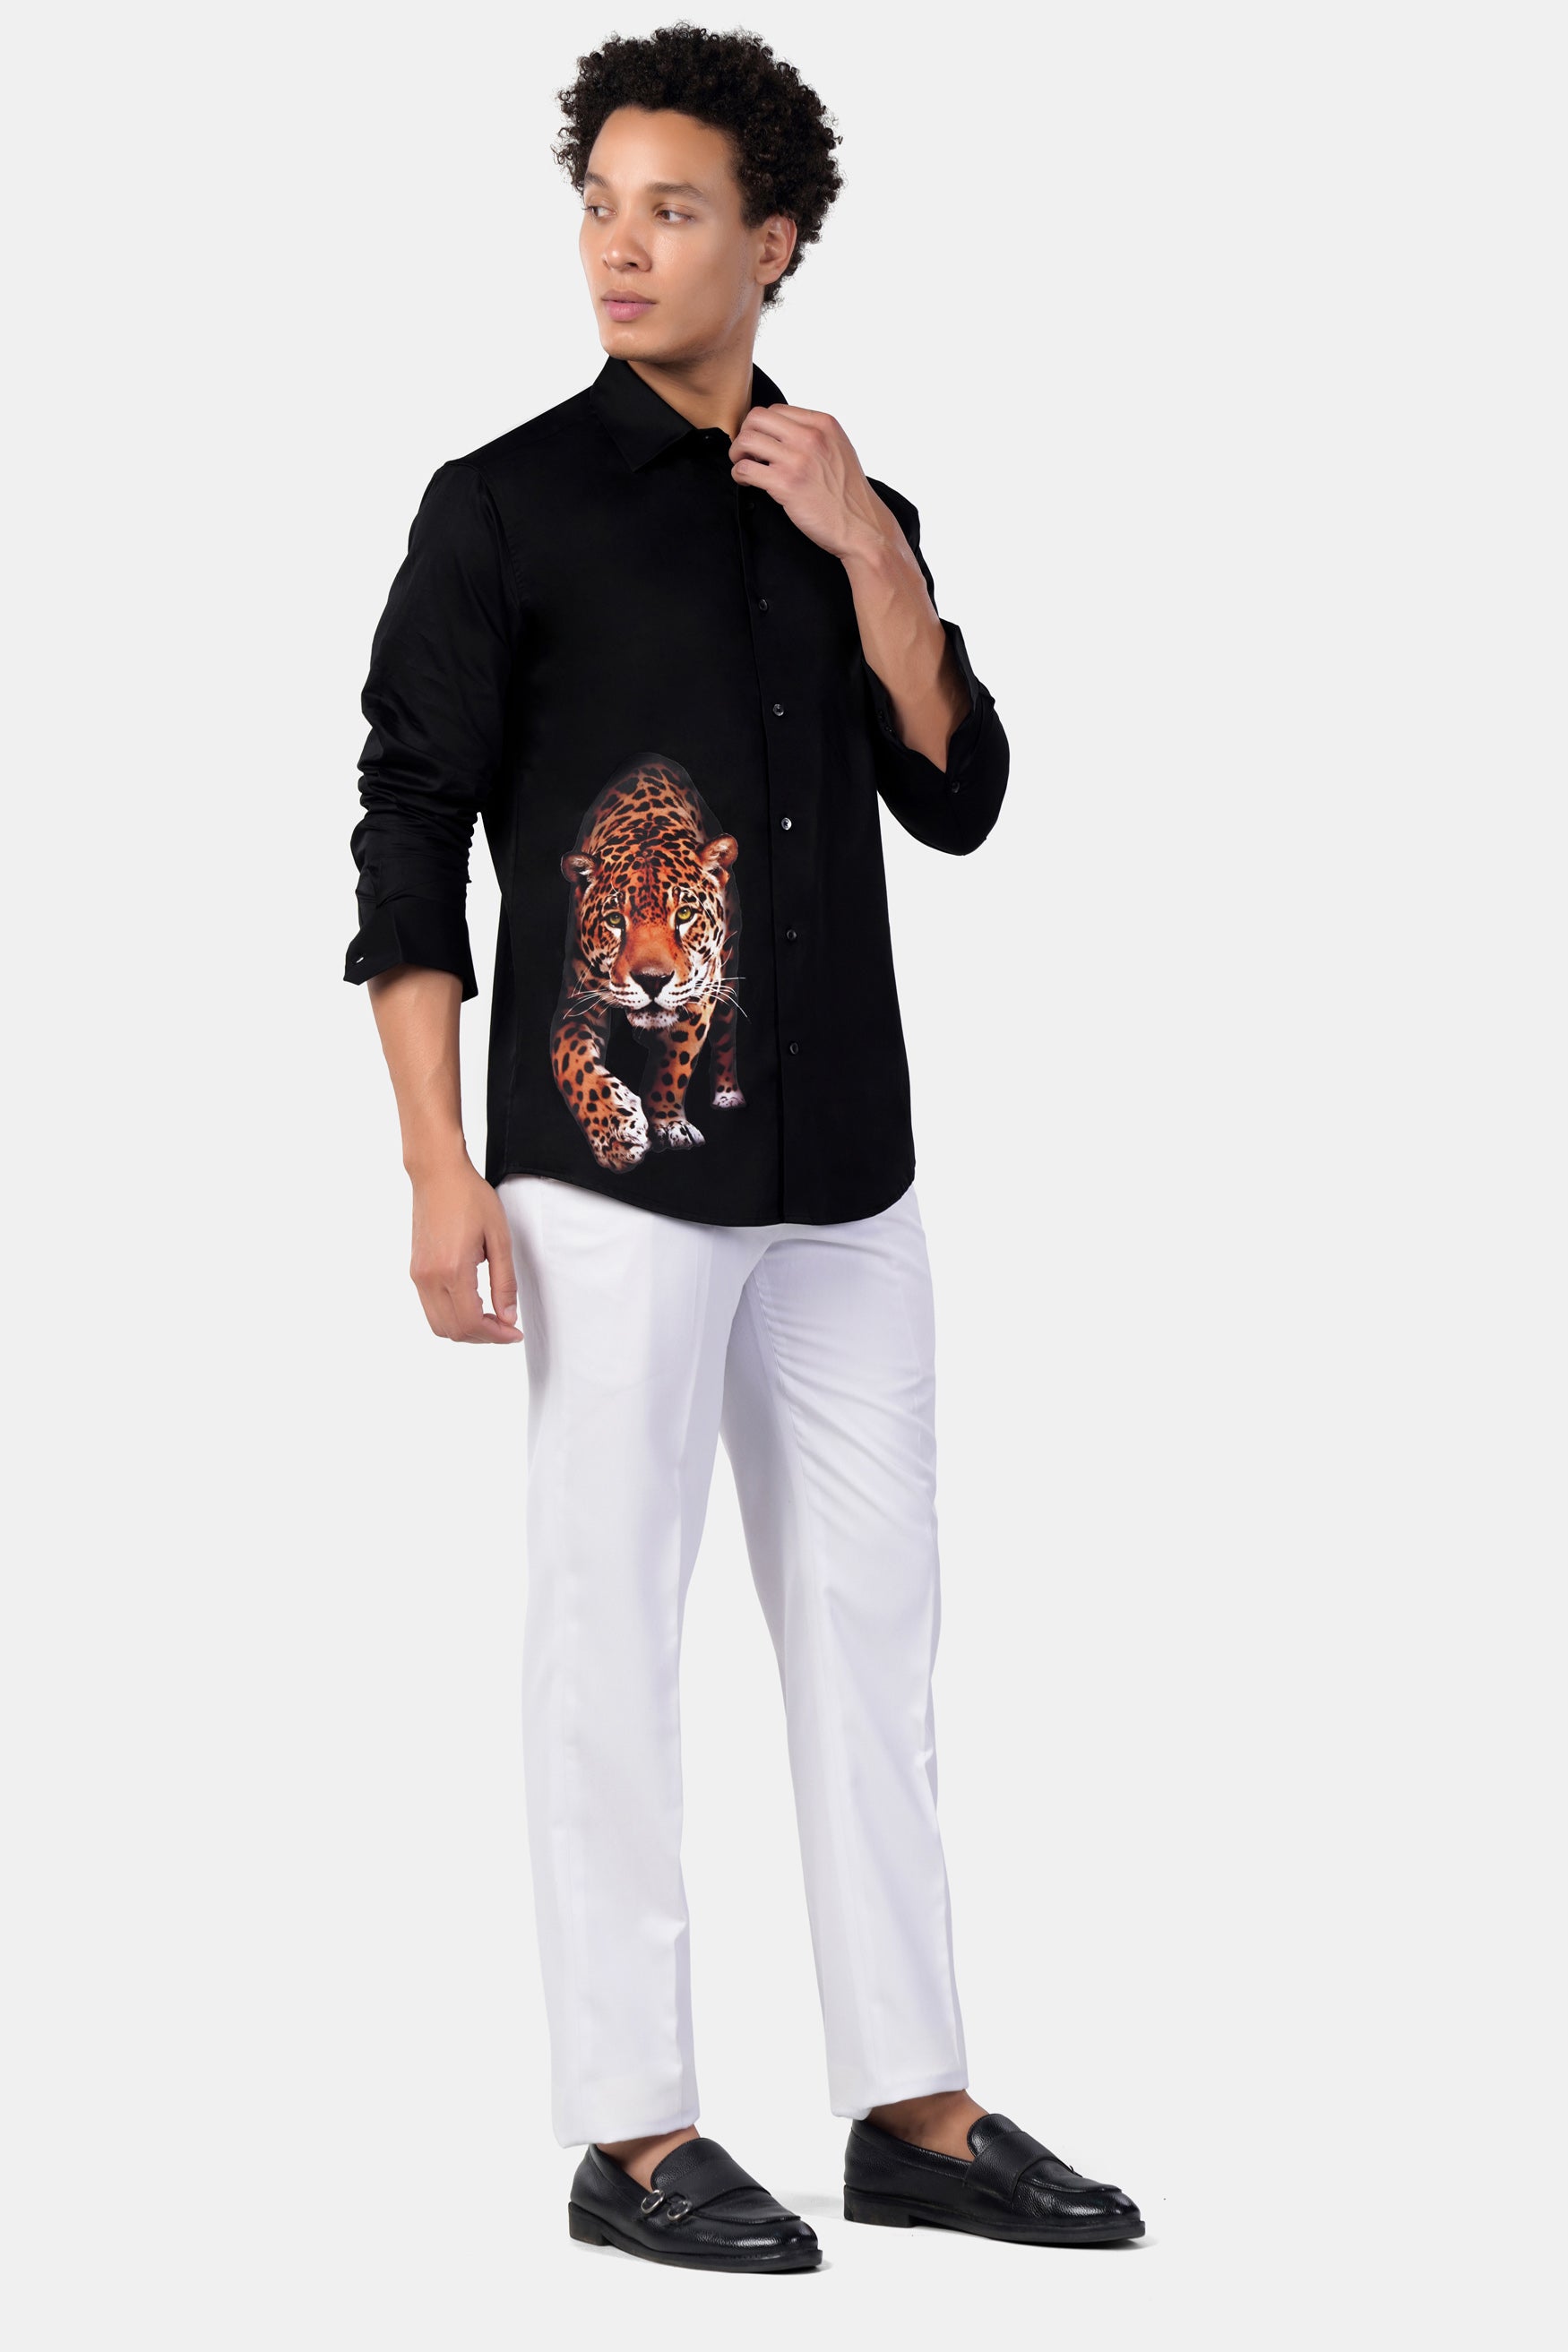 Jade Black Leopard Printed Casual Plain-Solid Premium Cotton Shirt